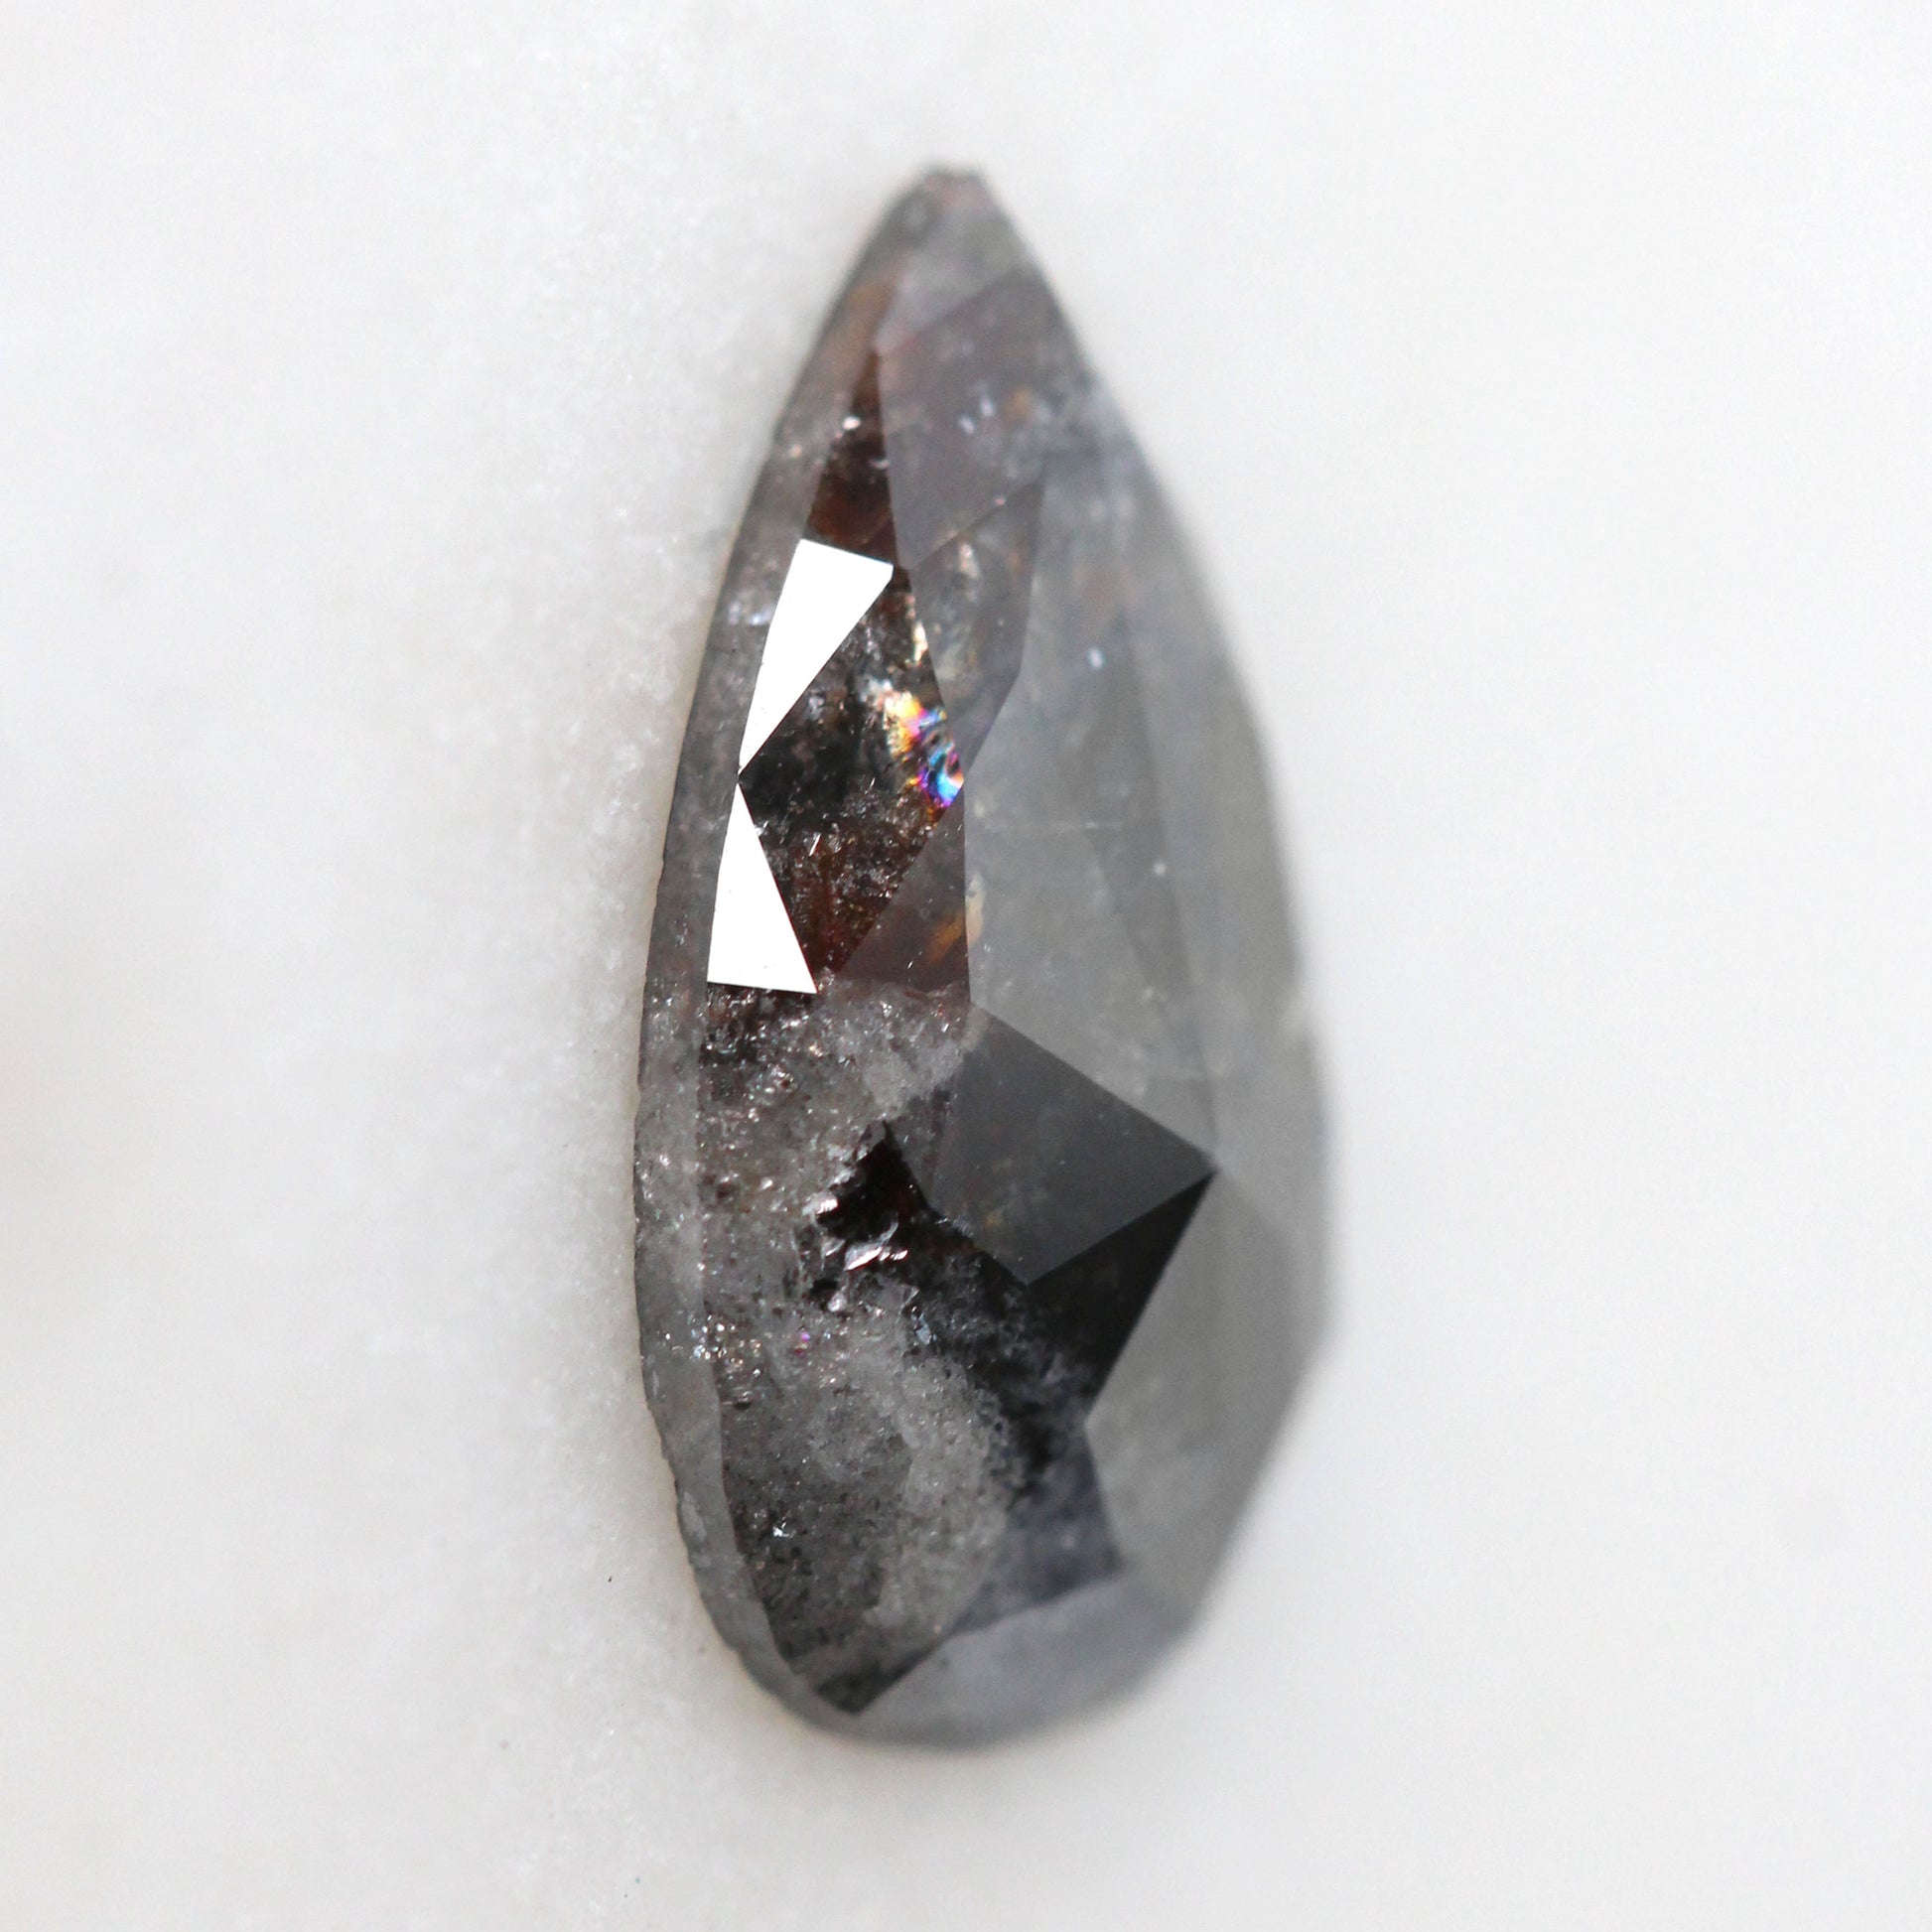 2.65 Carat Dark Gray Pear Celestial Diamond for Custom Work - Inventory Code DSP265 - Midwinter Co. Alternative Bridal Rings and Modern Fine Jewelry